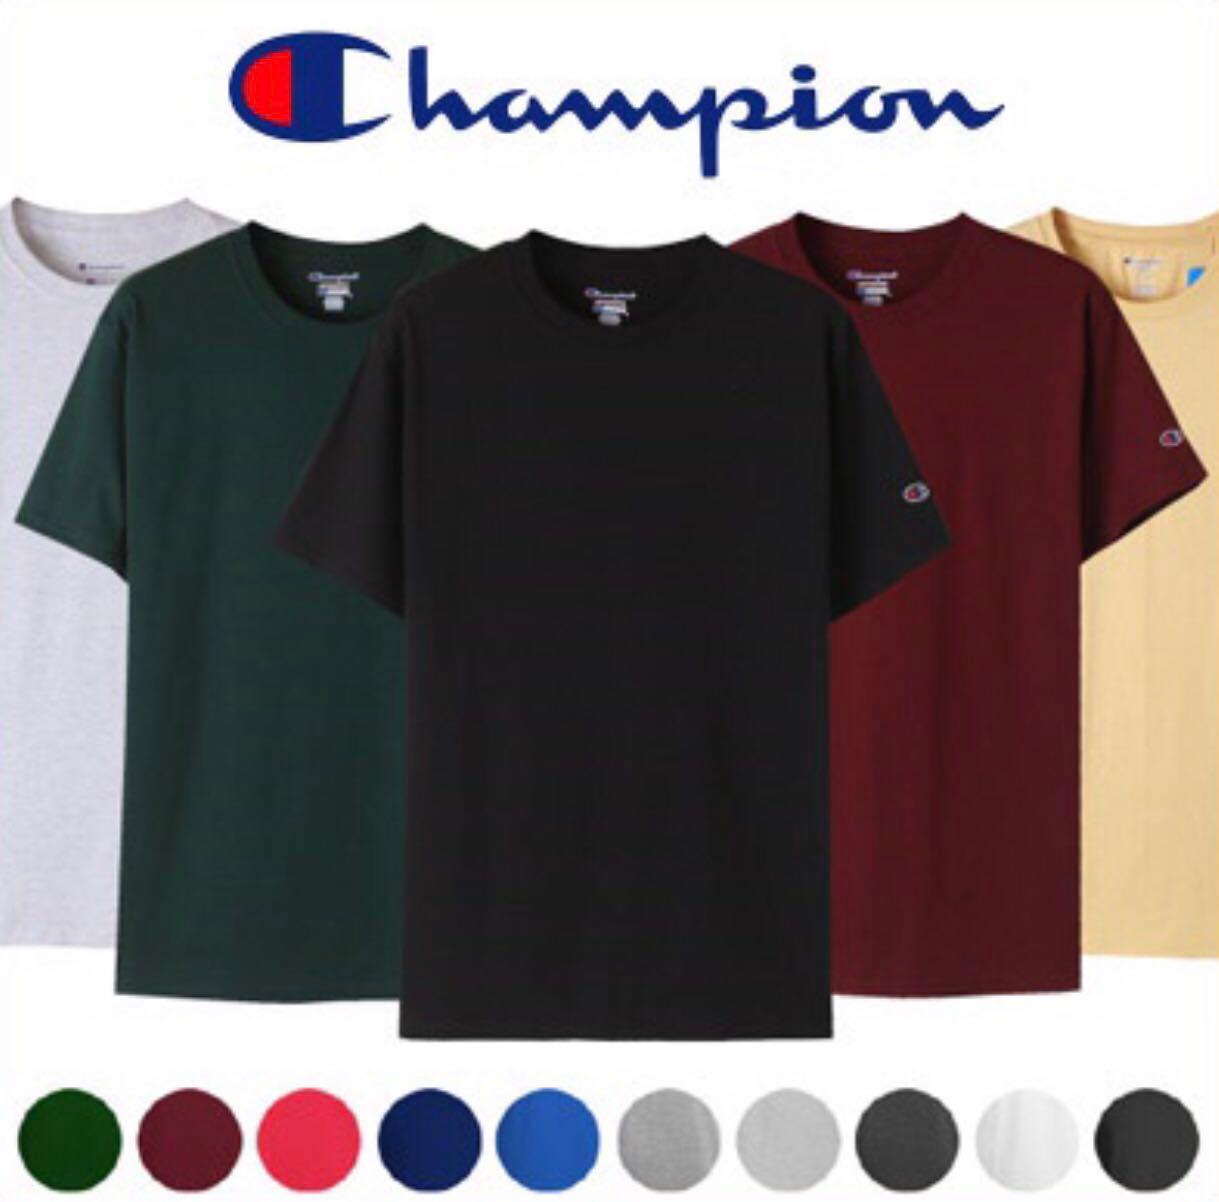 champion t shirt t425